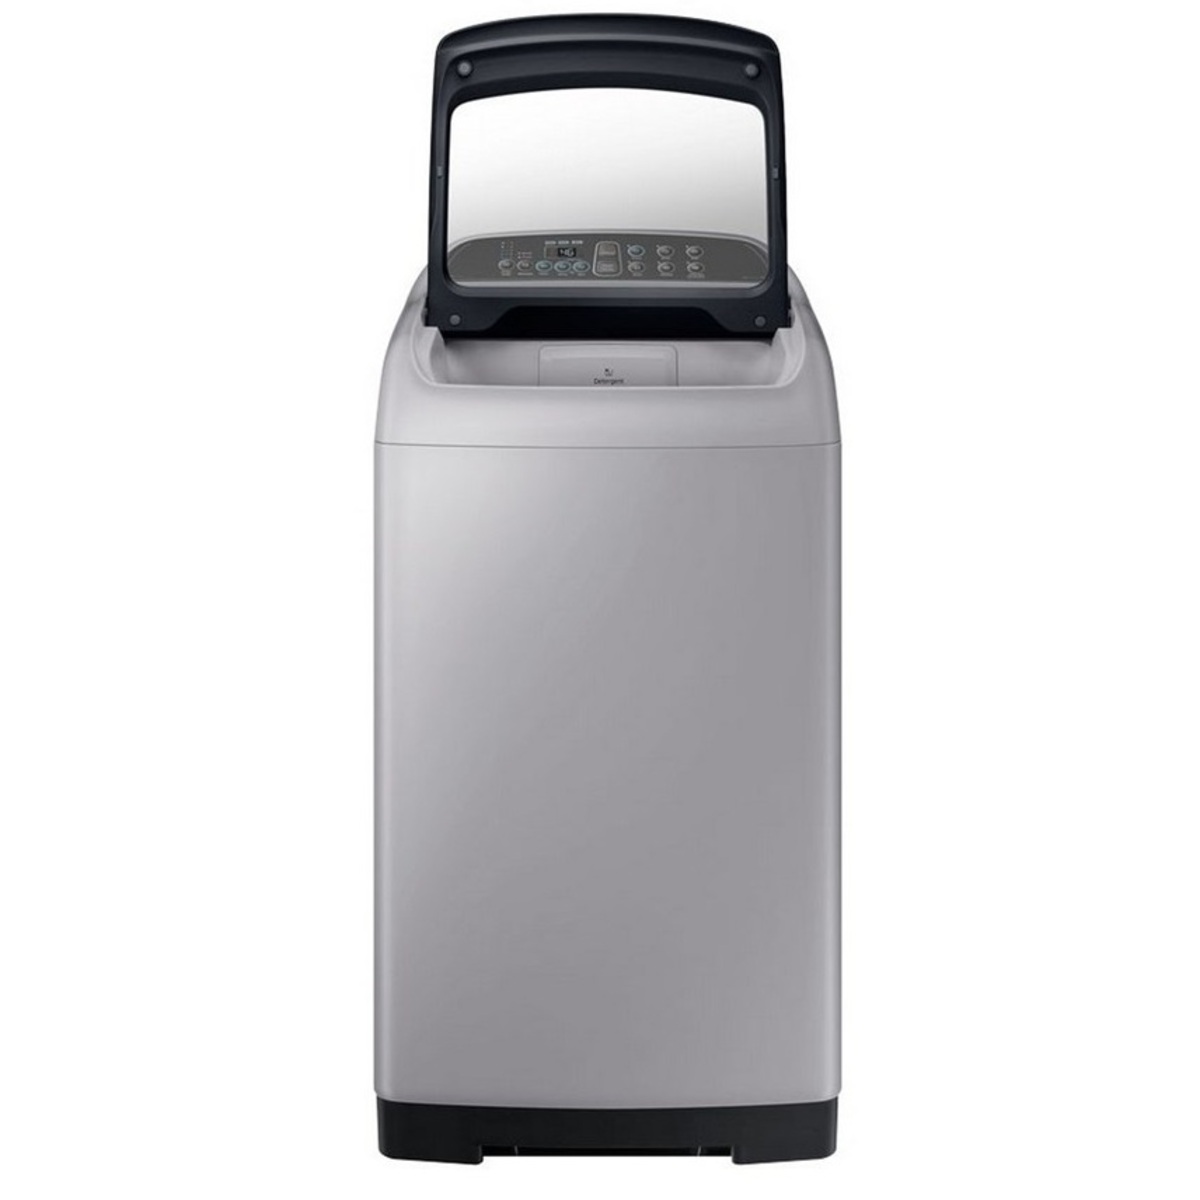 Samsung Fully Automatic Washing Machine WA62M4200HA 6.2Kg